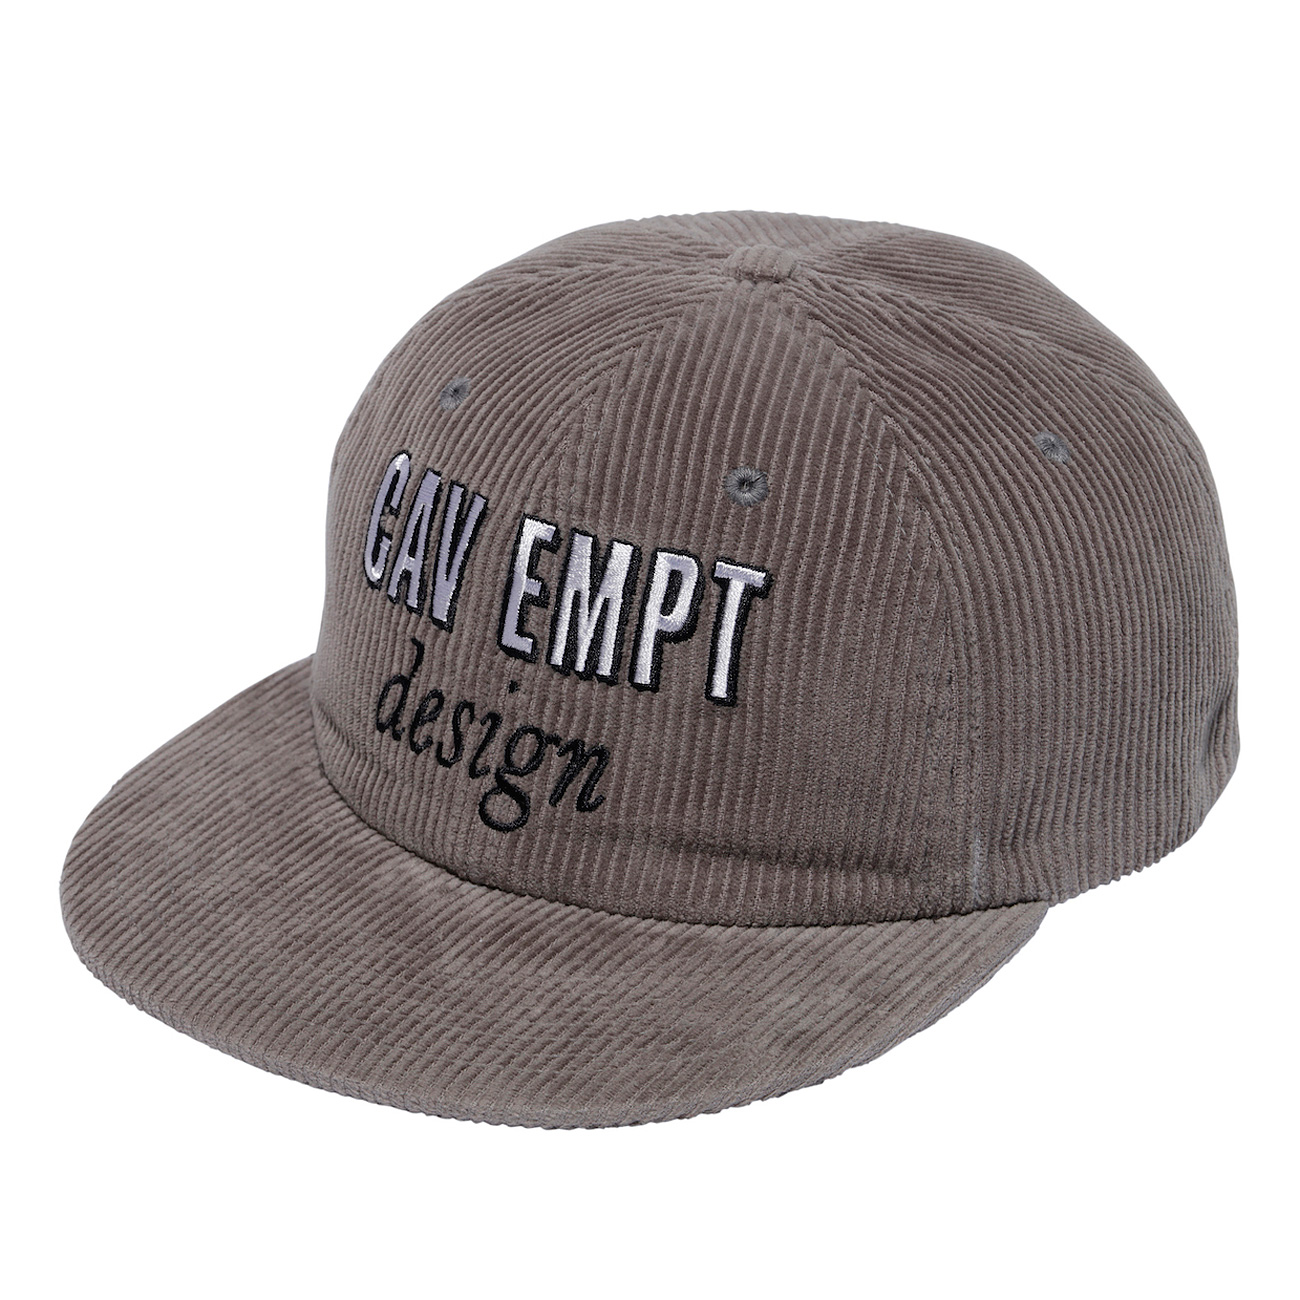 CAV EMPT DESIGN LOW CAP - Grey